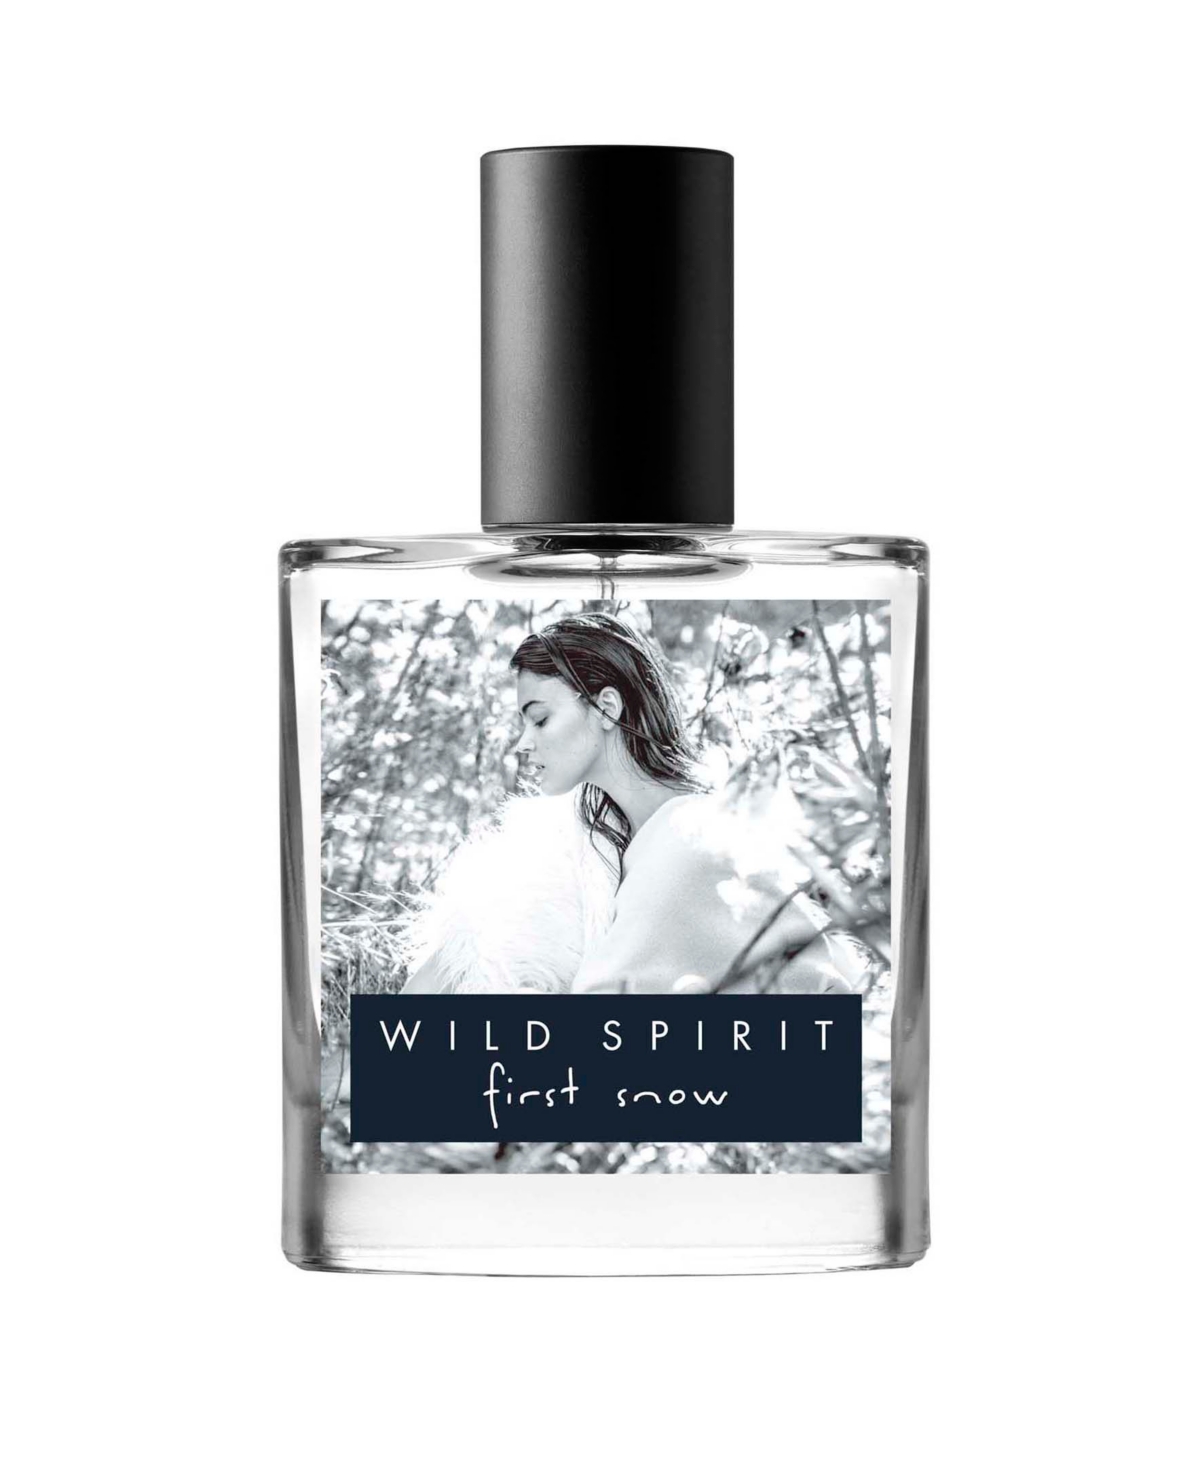 Wild Spirit First Snow Eau de Parfum Spray, 1 oz.